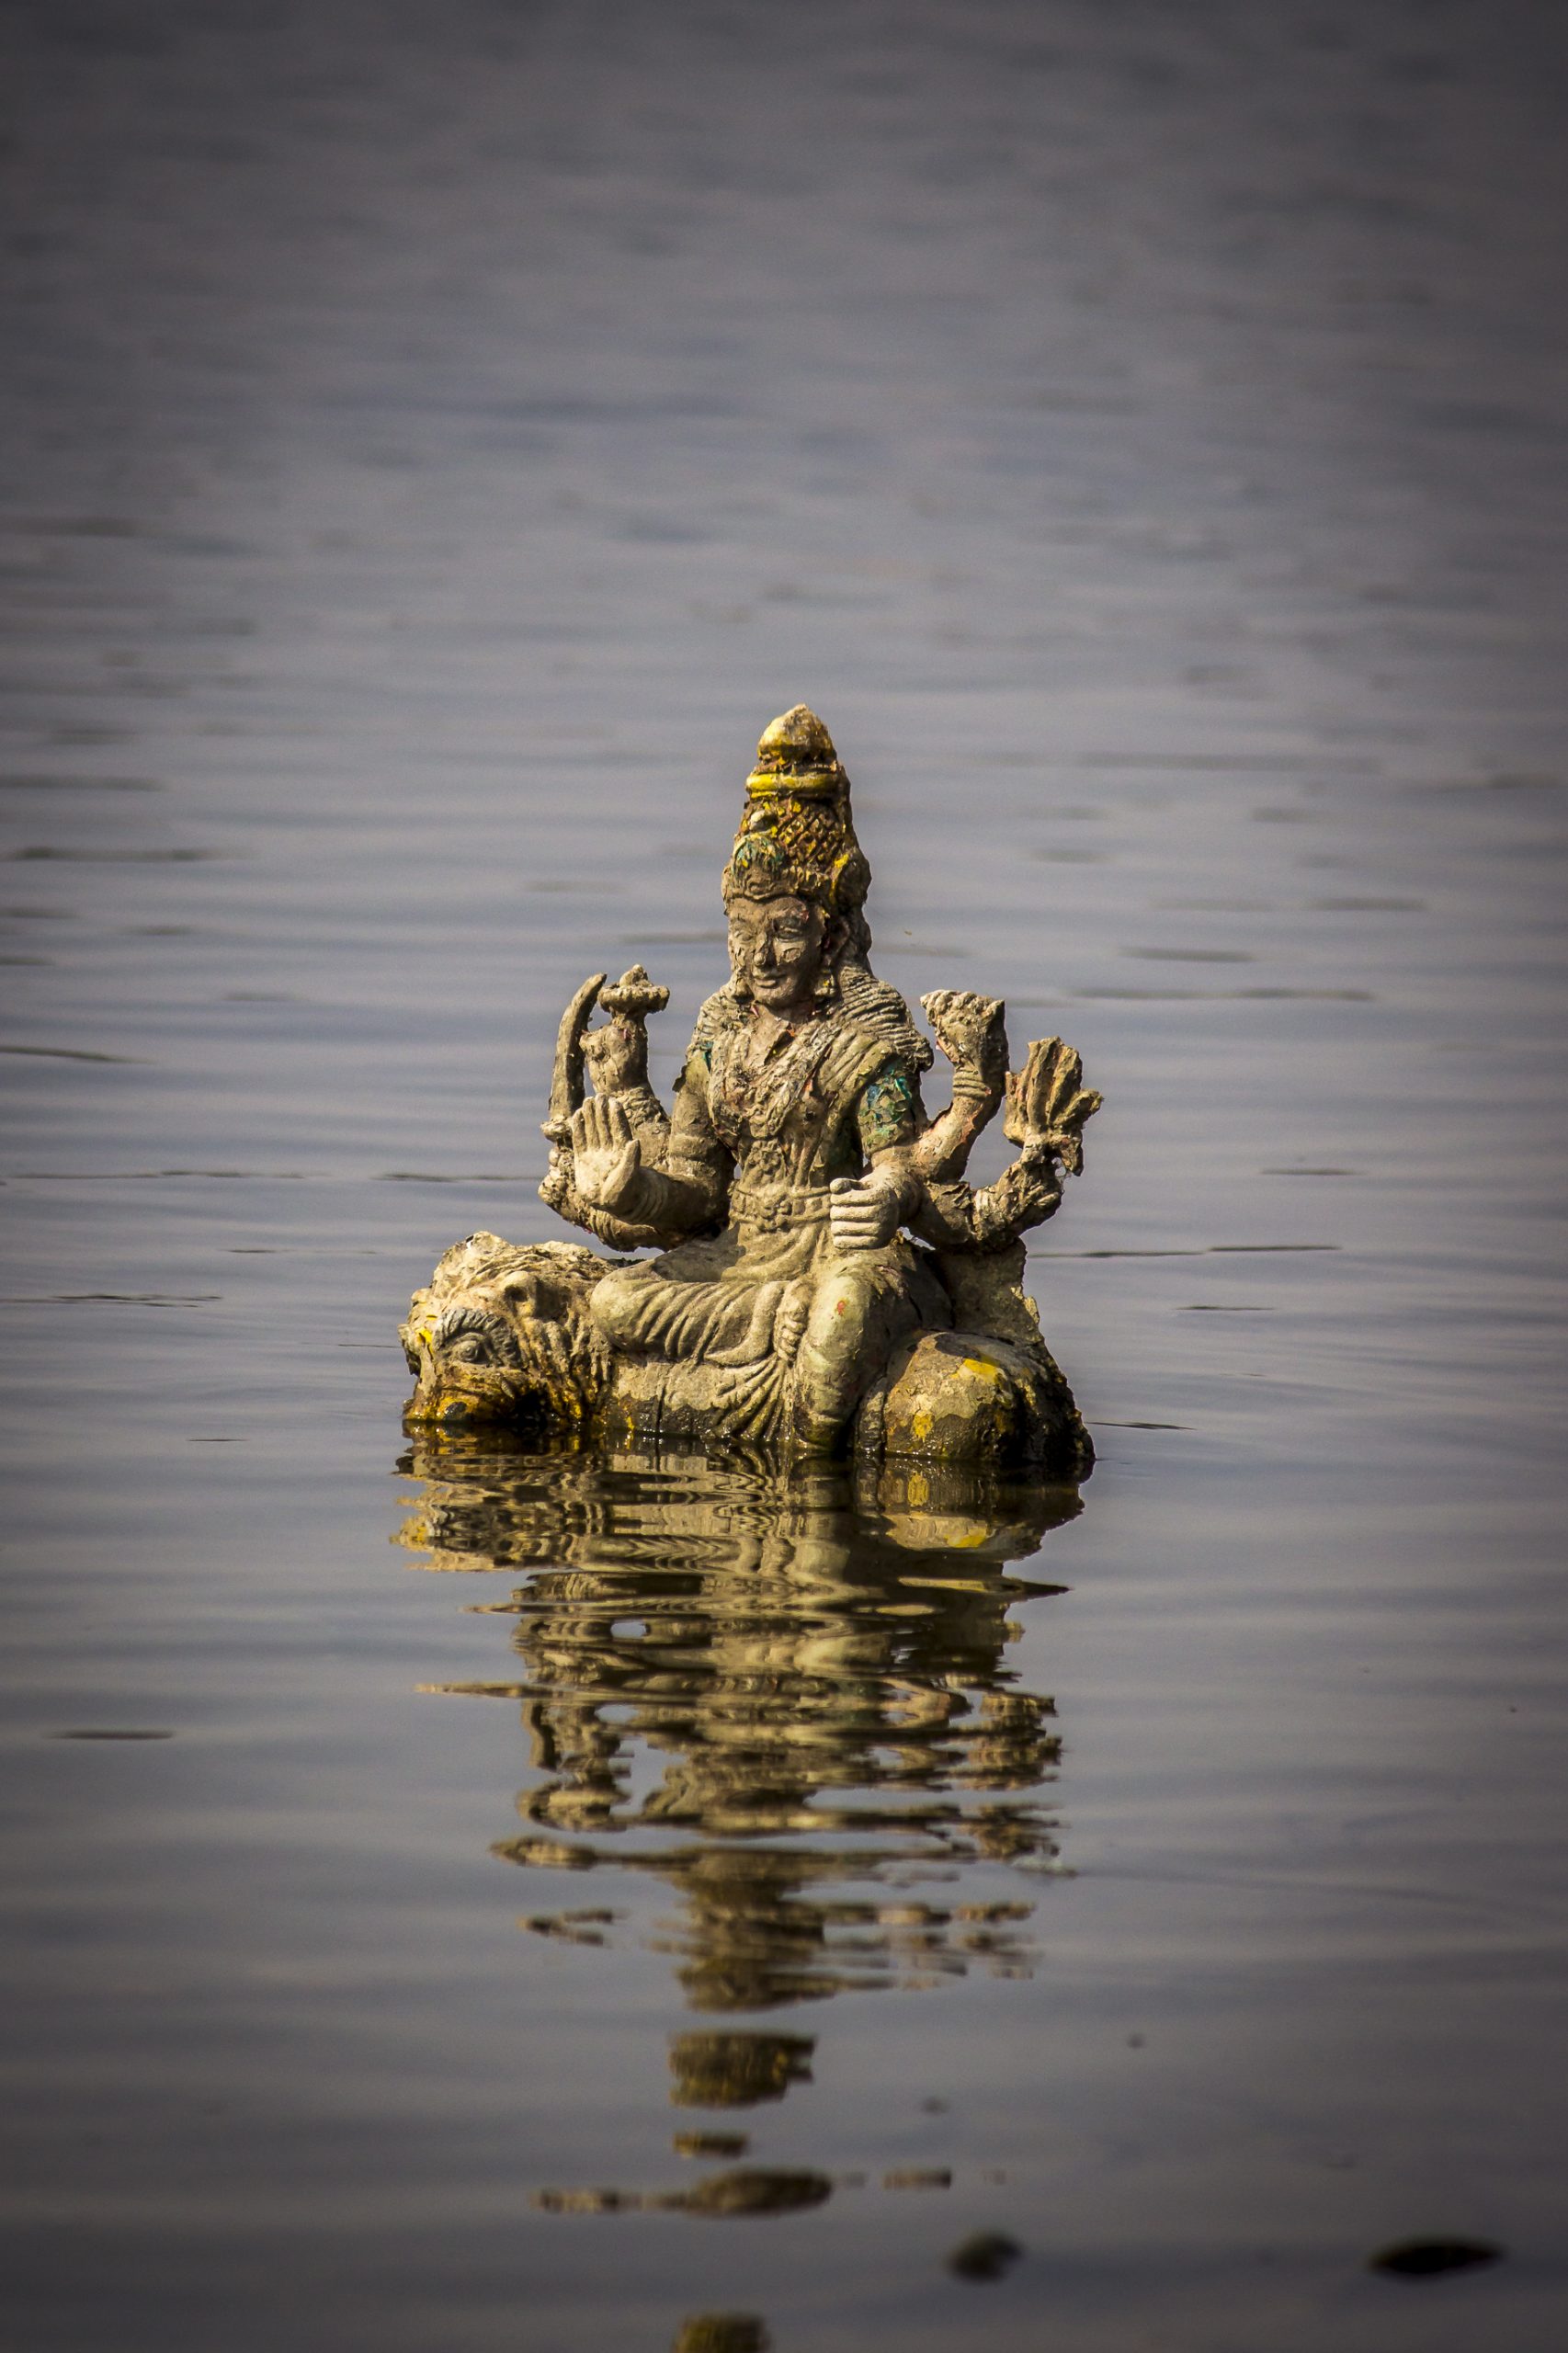 Hindu goddess sculpture in water